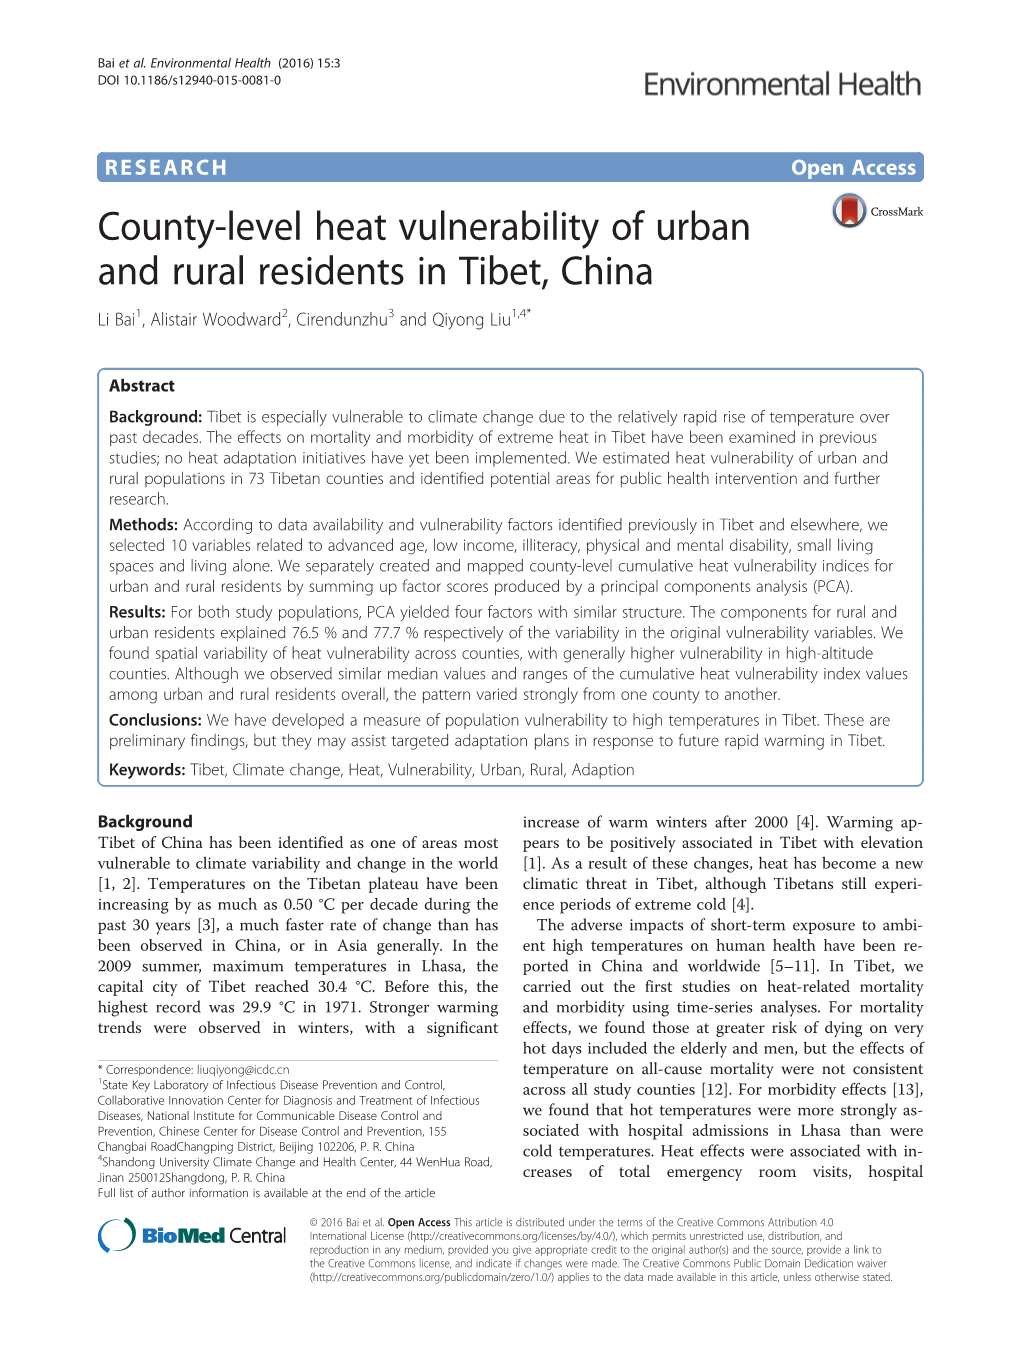 County-Level Heat Vulnerability of Urban and Rural Residents in Tibet, China Li Bai1, Alistair Woodward2, Cirendunzhu3 and Qiyong Liu1,4*